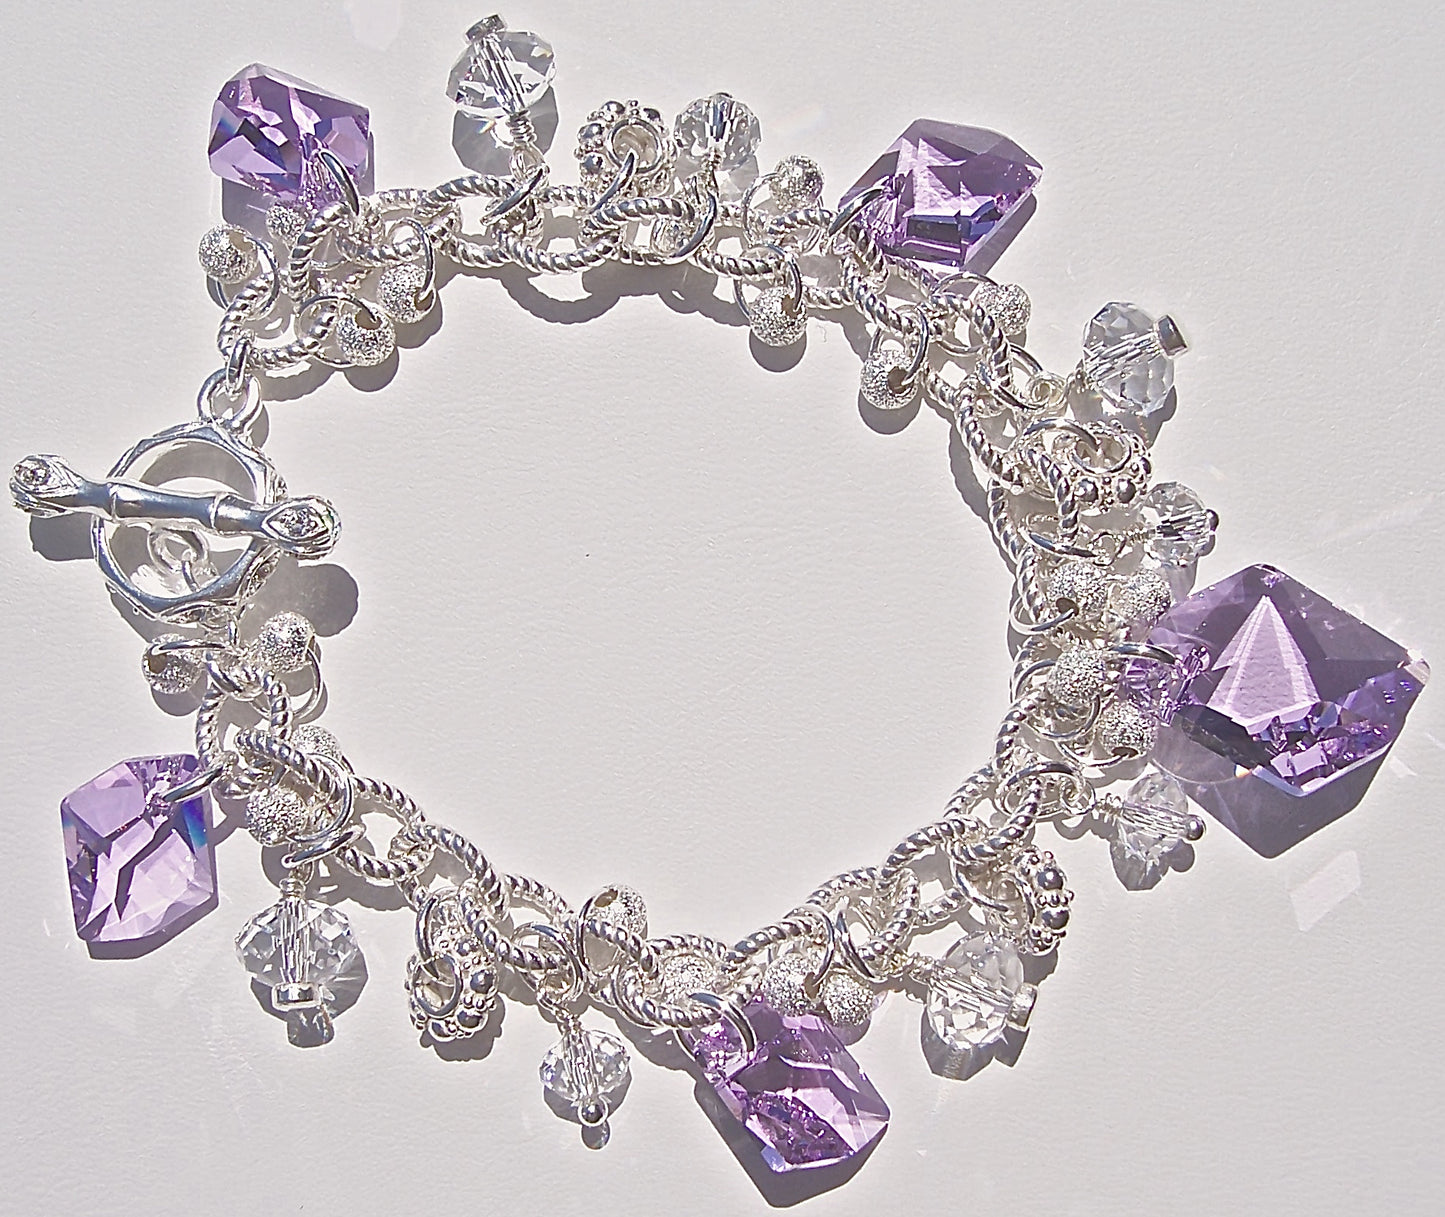 Arpaia "Violet Horizon" Bracelet from Caribbean Collection